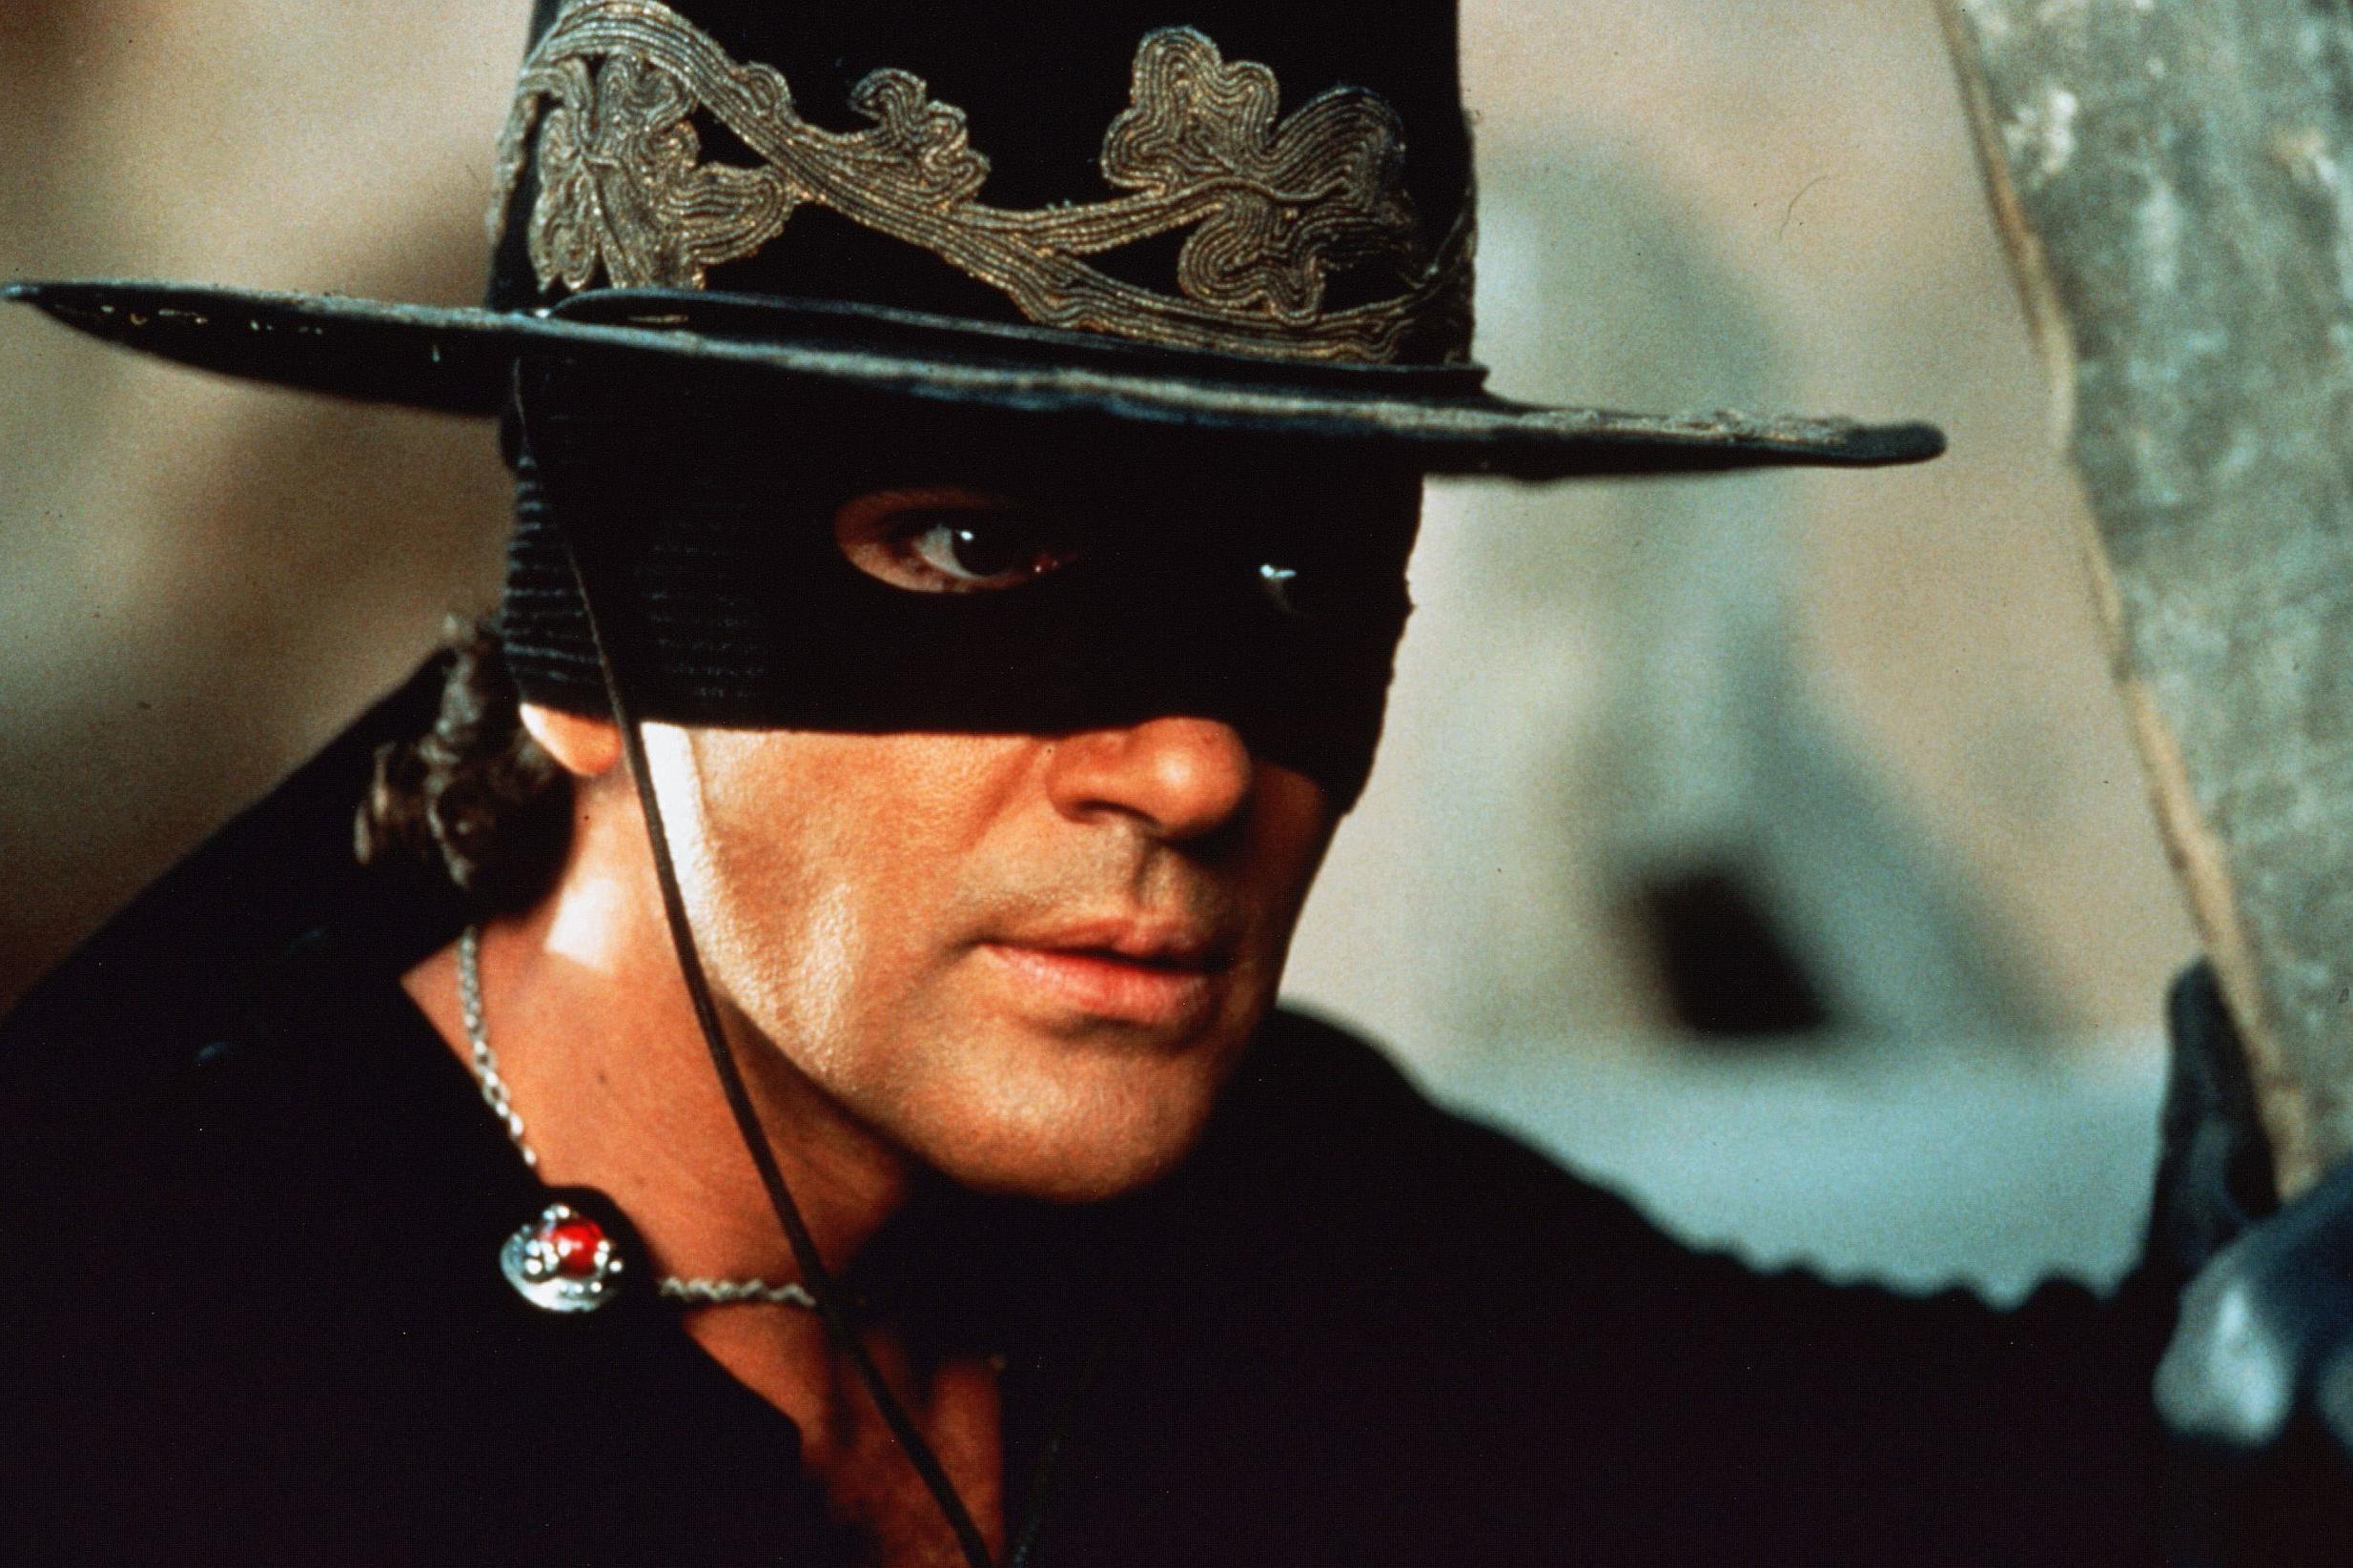 Antonio Banderas in 'The Mask Of Zorro'